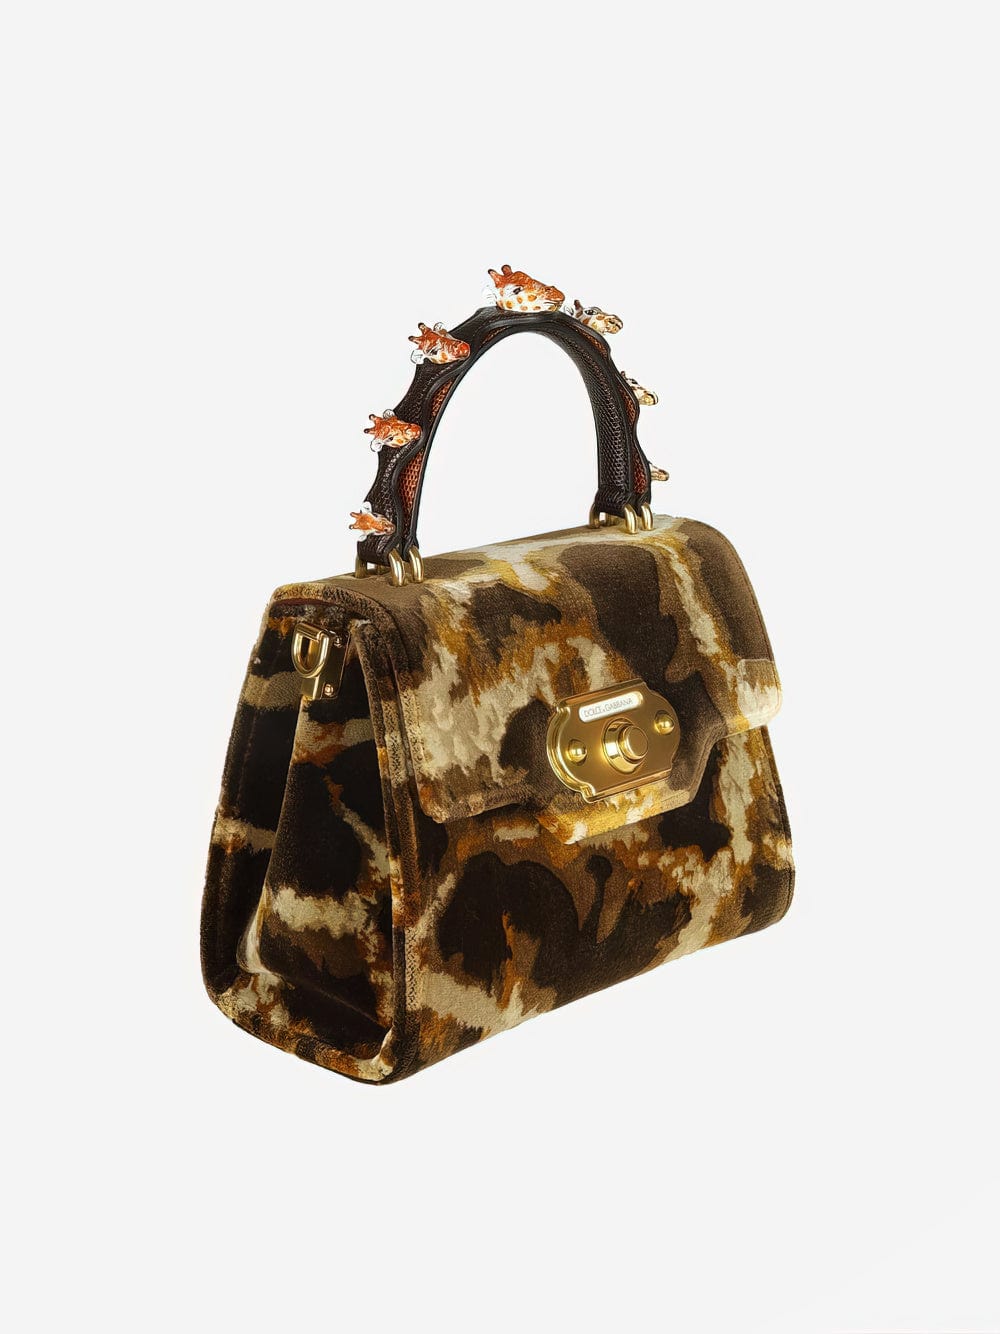 Dolce & Gabbana Giraffe-Print Welcome Tote Bag